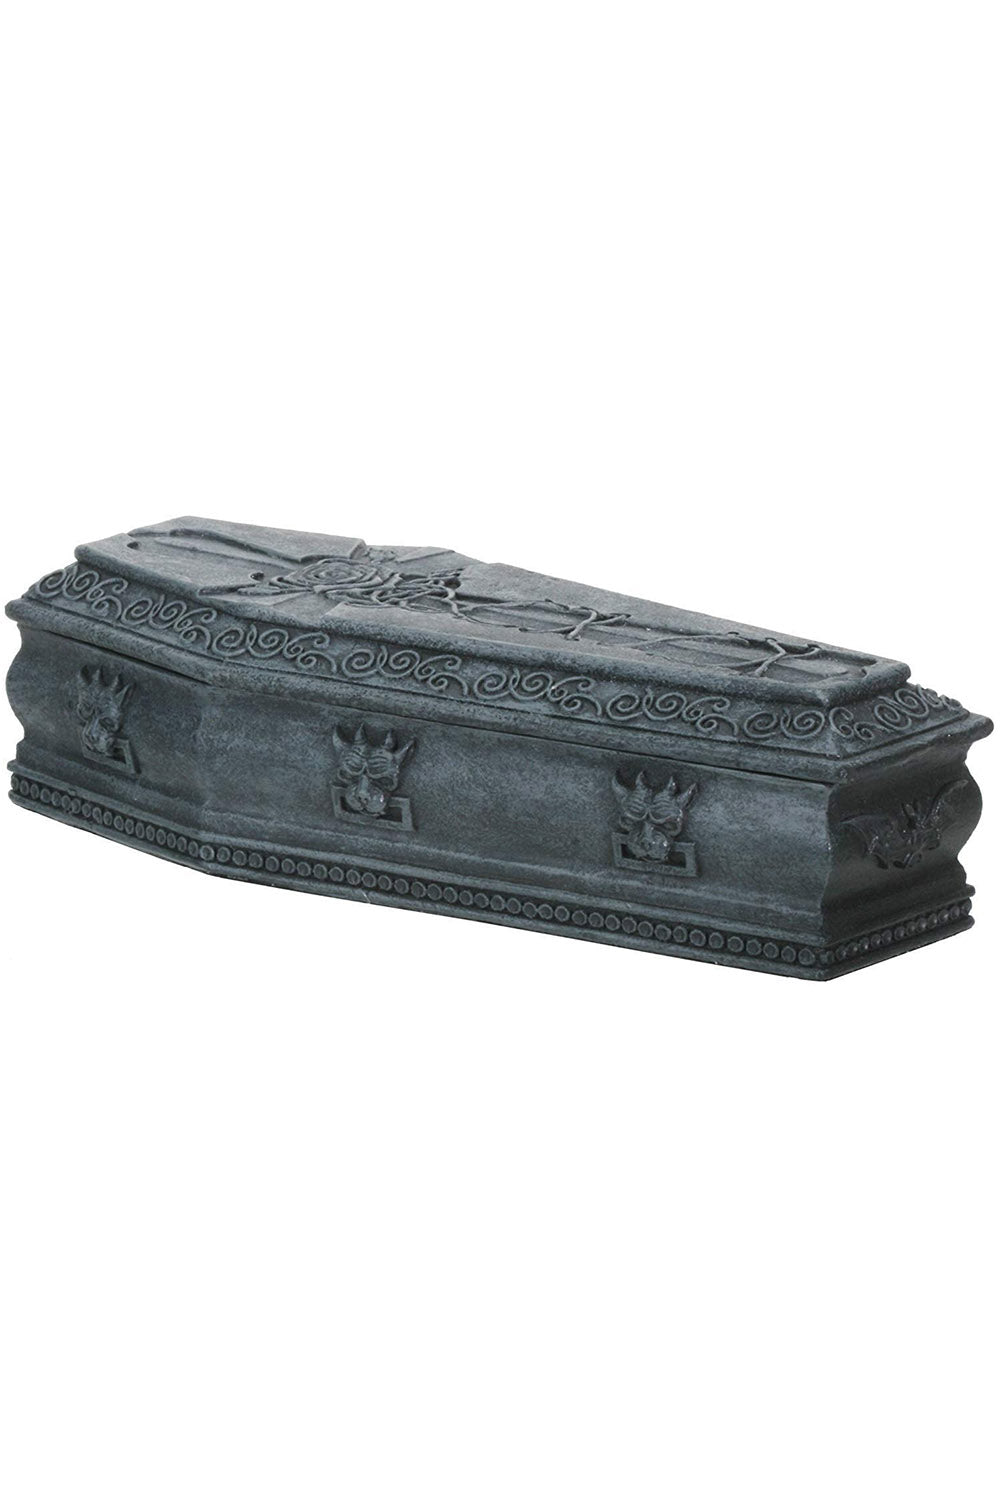 Gargoyle Coffin Box